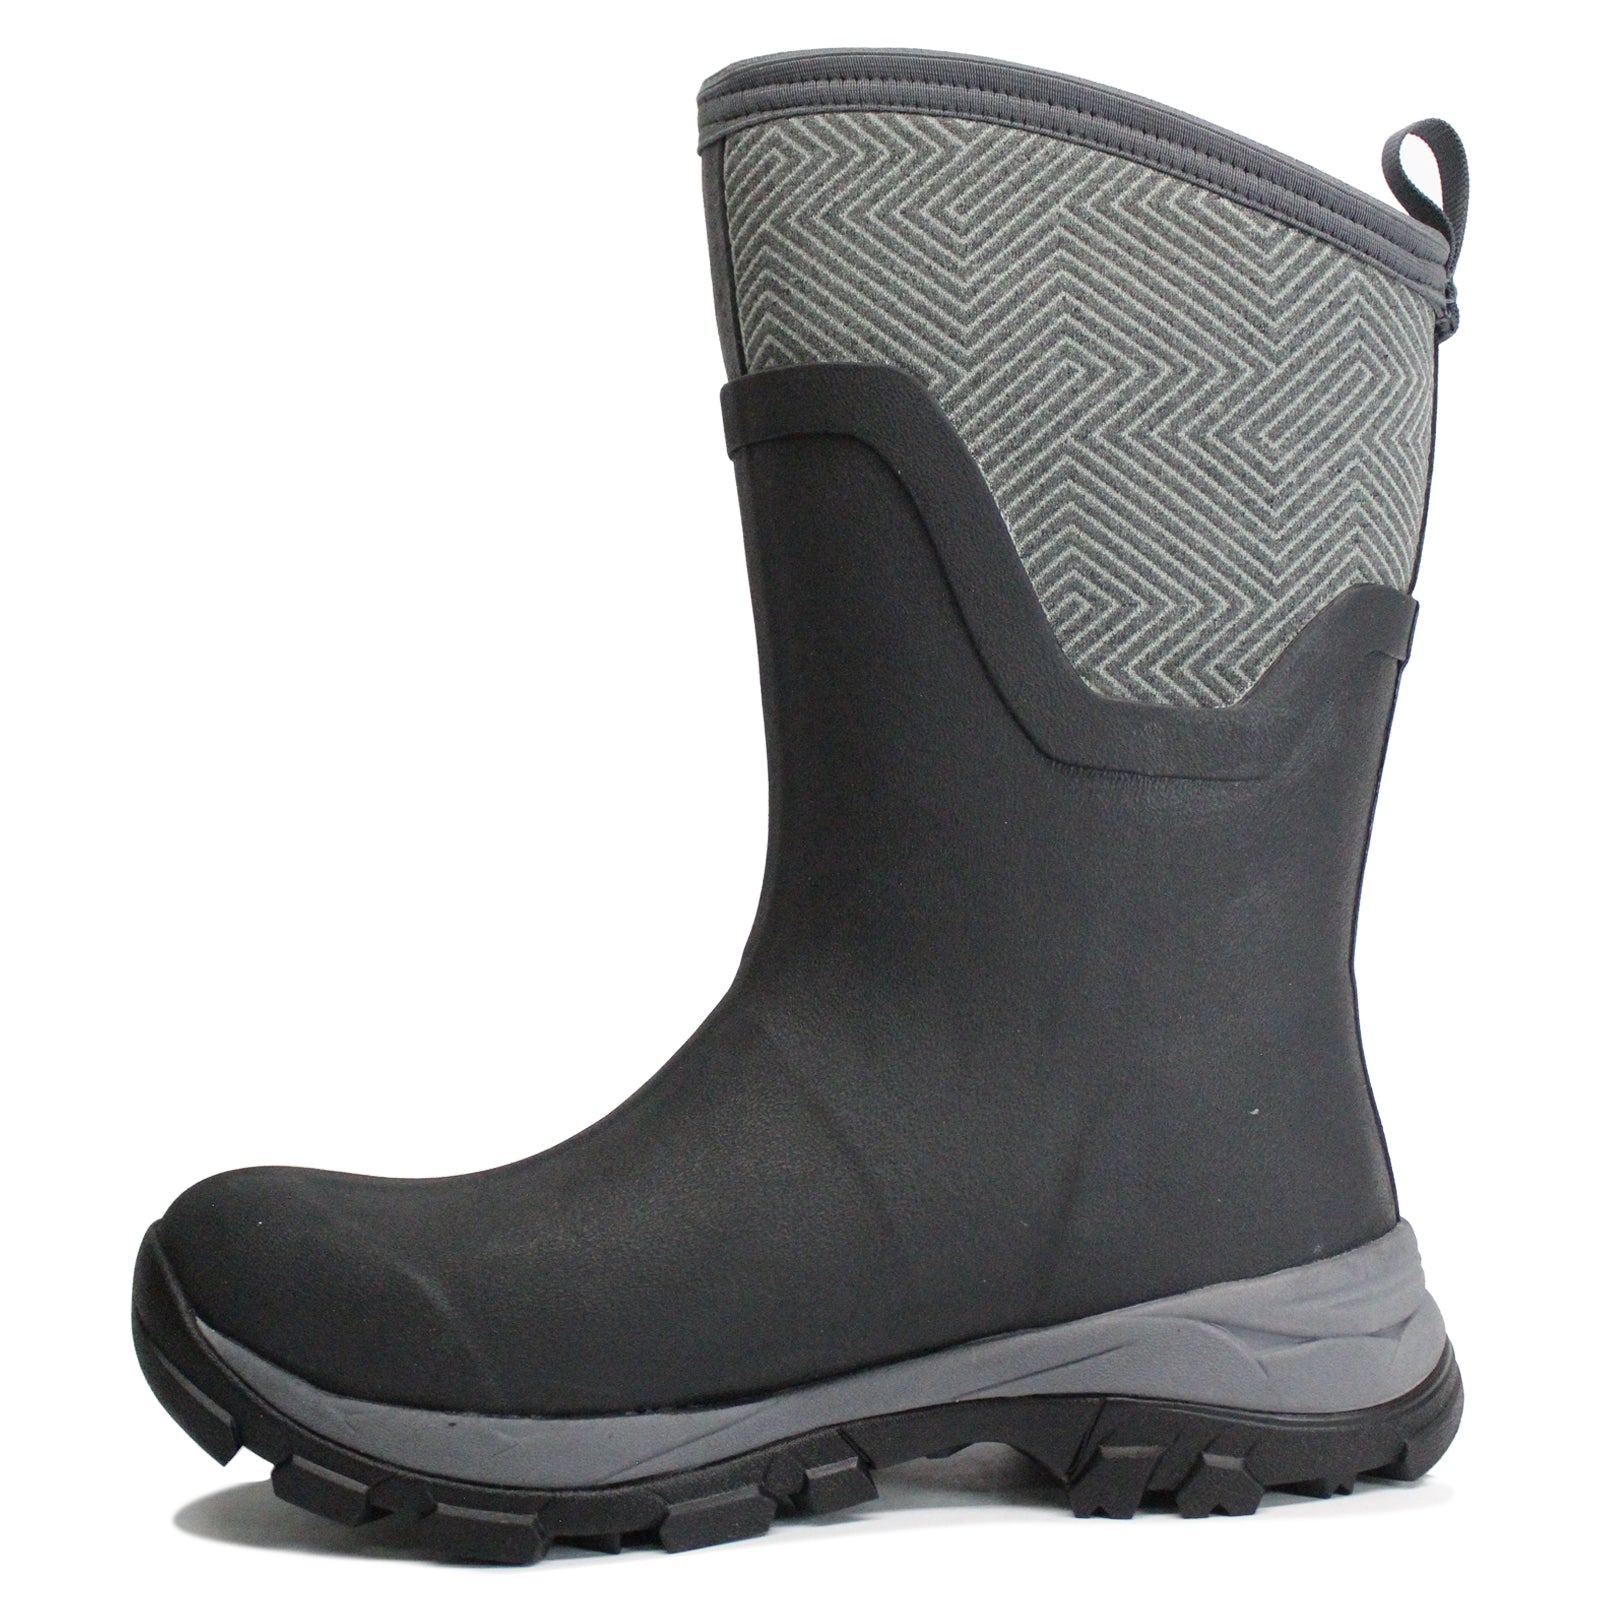 Muck Boot Arctic Ice Vibram Arctic Grip All Terrain Waterproof Women's Boots#color_black gray geometric